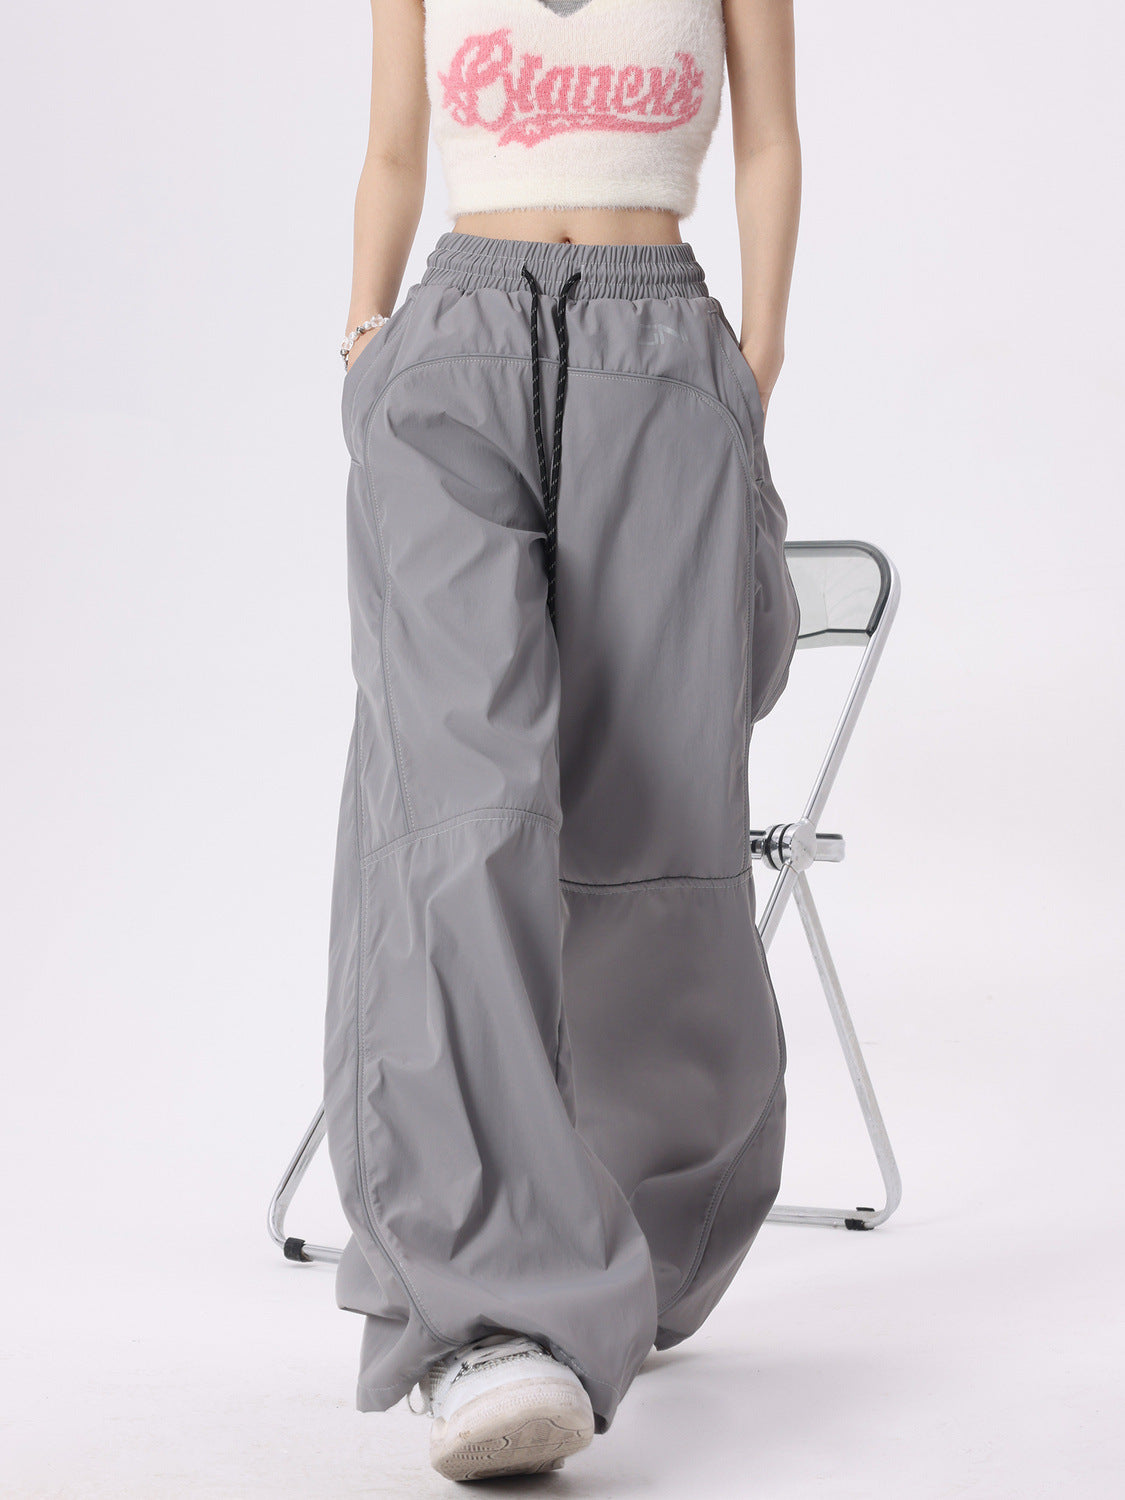 Reflective American Retro Wide Leg Pants for Women - Functional & Stylish Jogging/Casual Streetwear